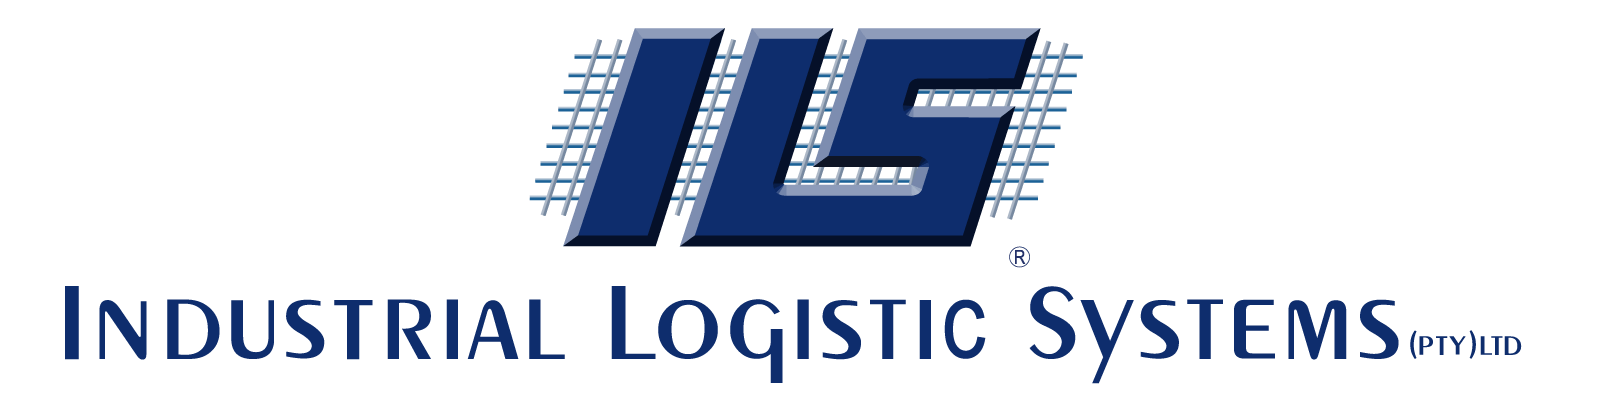 Ils Logo - ILS - Industrial Logistic Systems